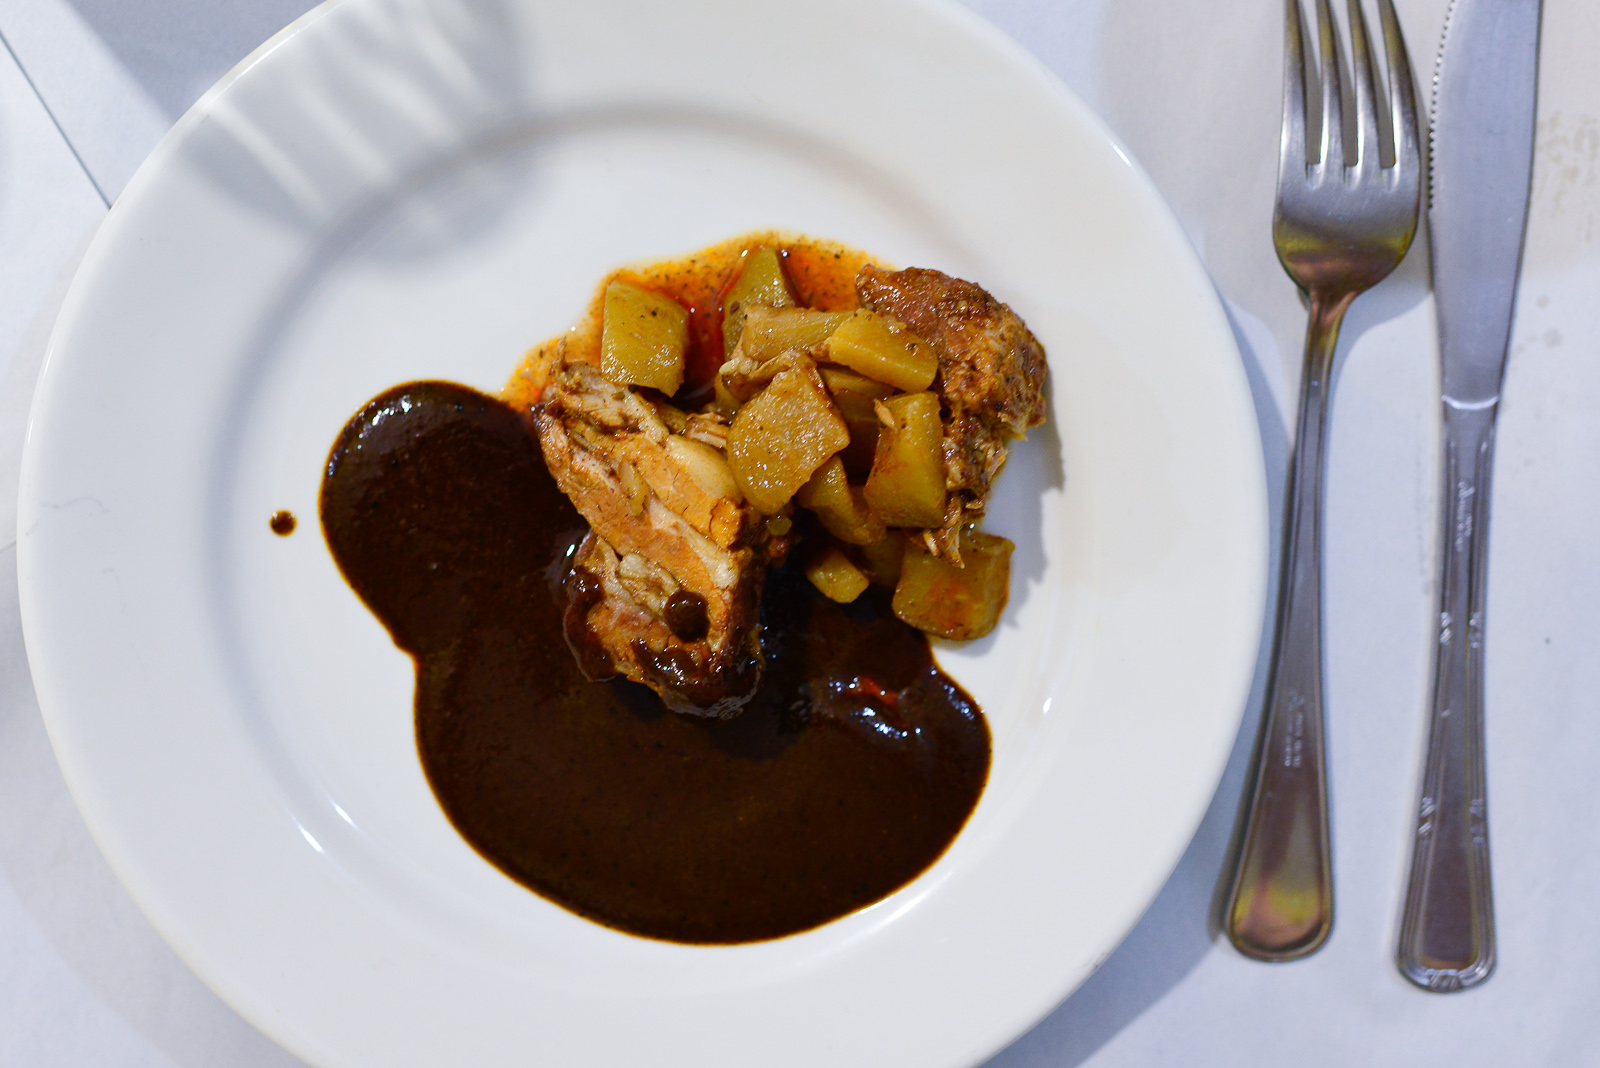 Asado de puerco con mole negro (pork roasted with black mole fro